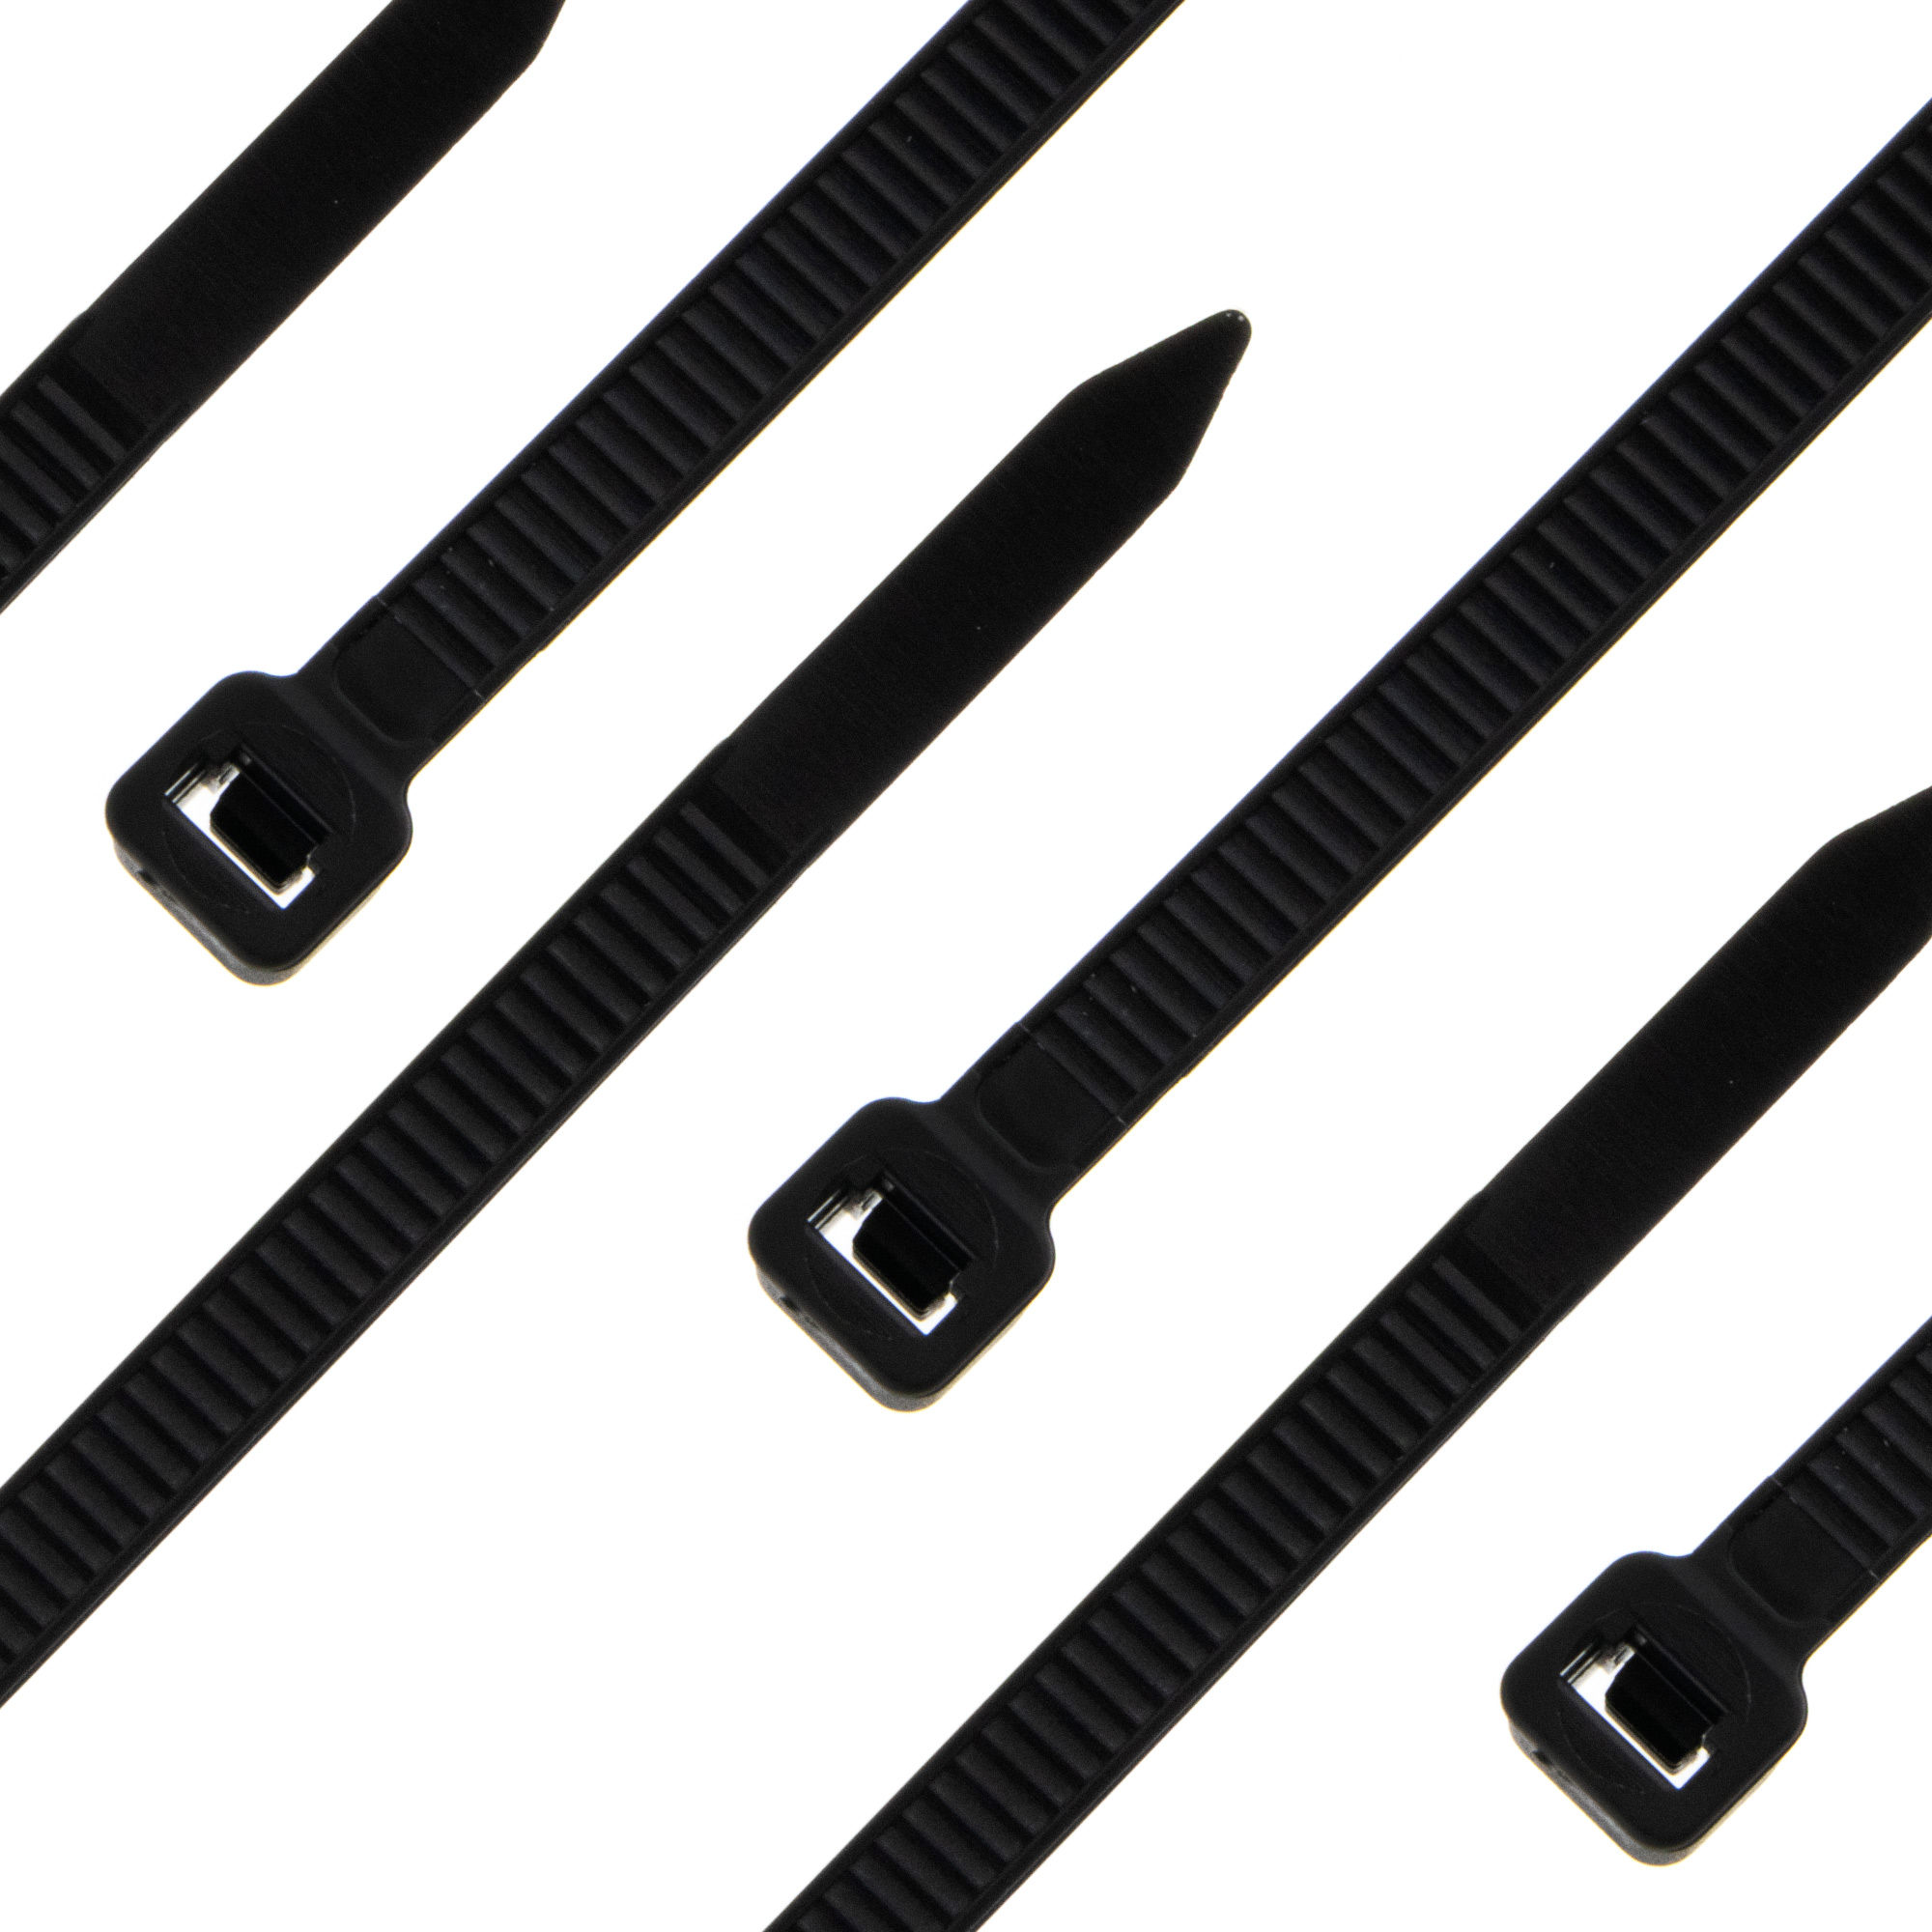 Cable tie self-locking 100 x 2,5mm, black, 100PCS